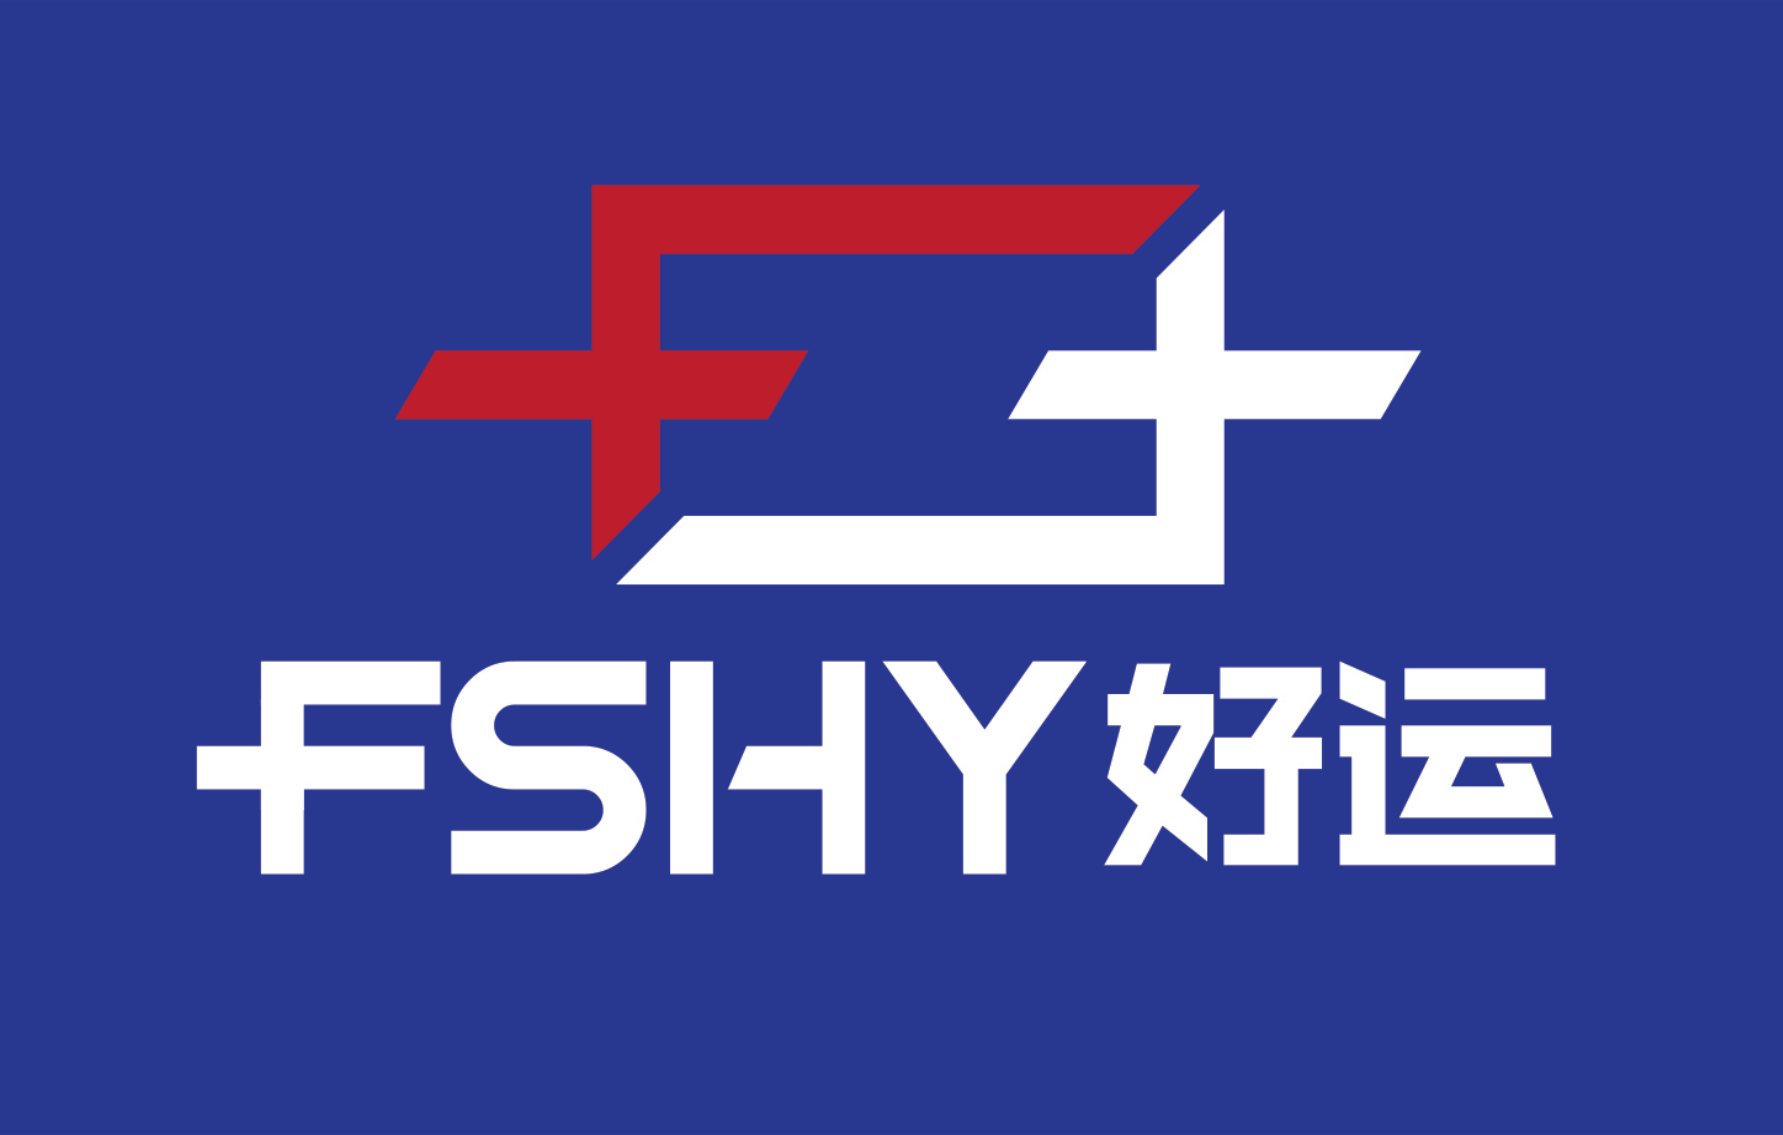 FSHYbrand introduction